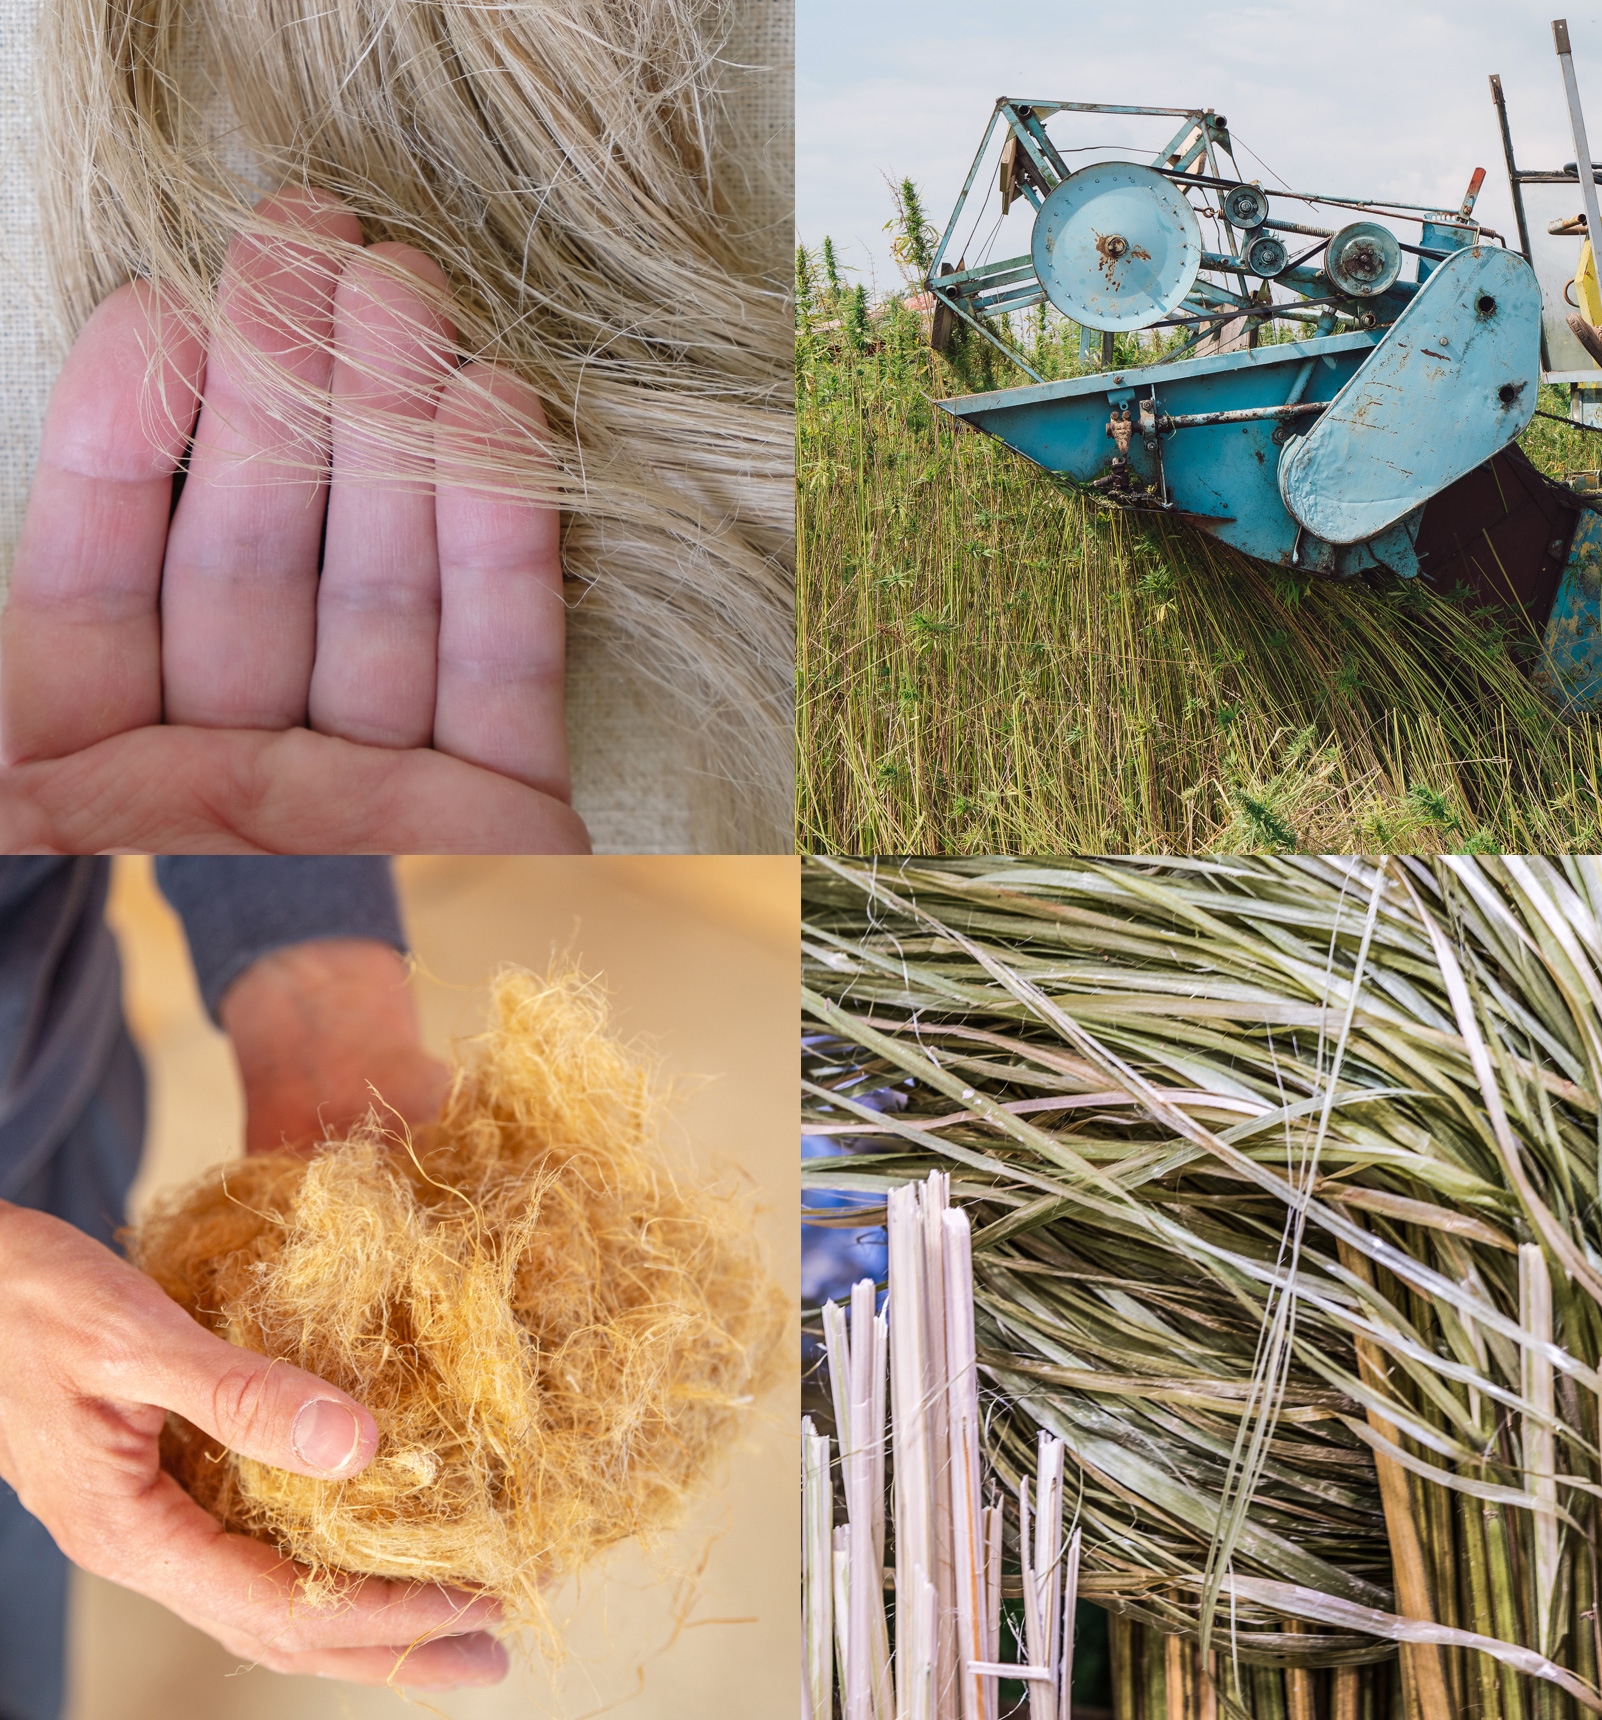 representative composite image of hemp from harvest to textile-grade hemp fiber